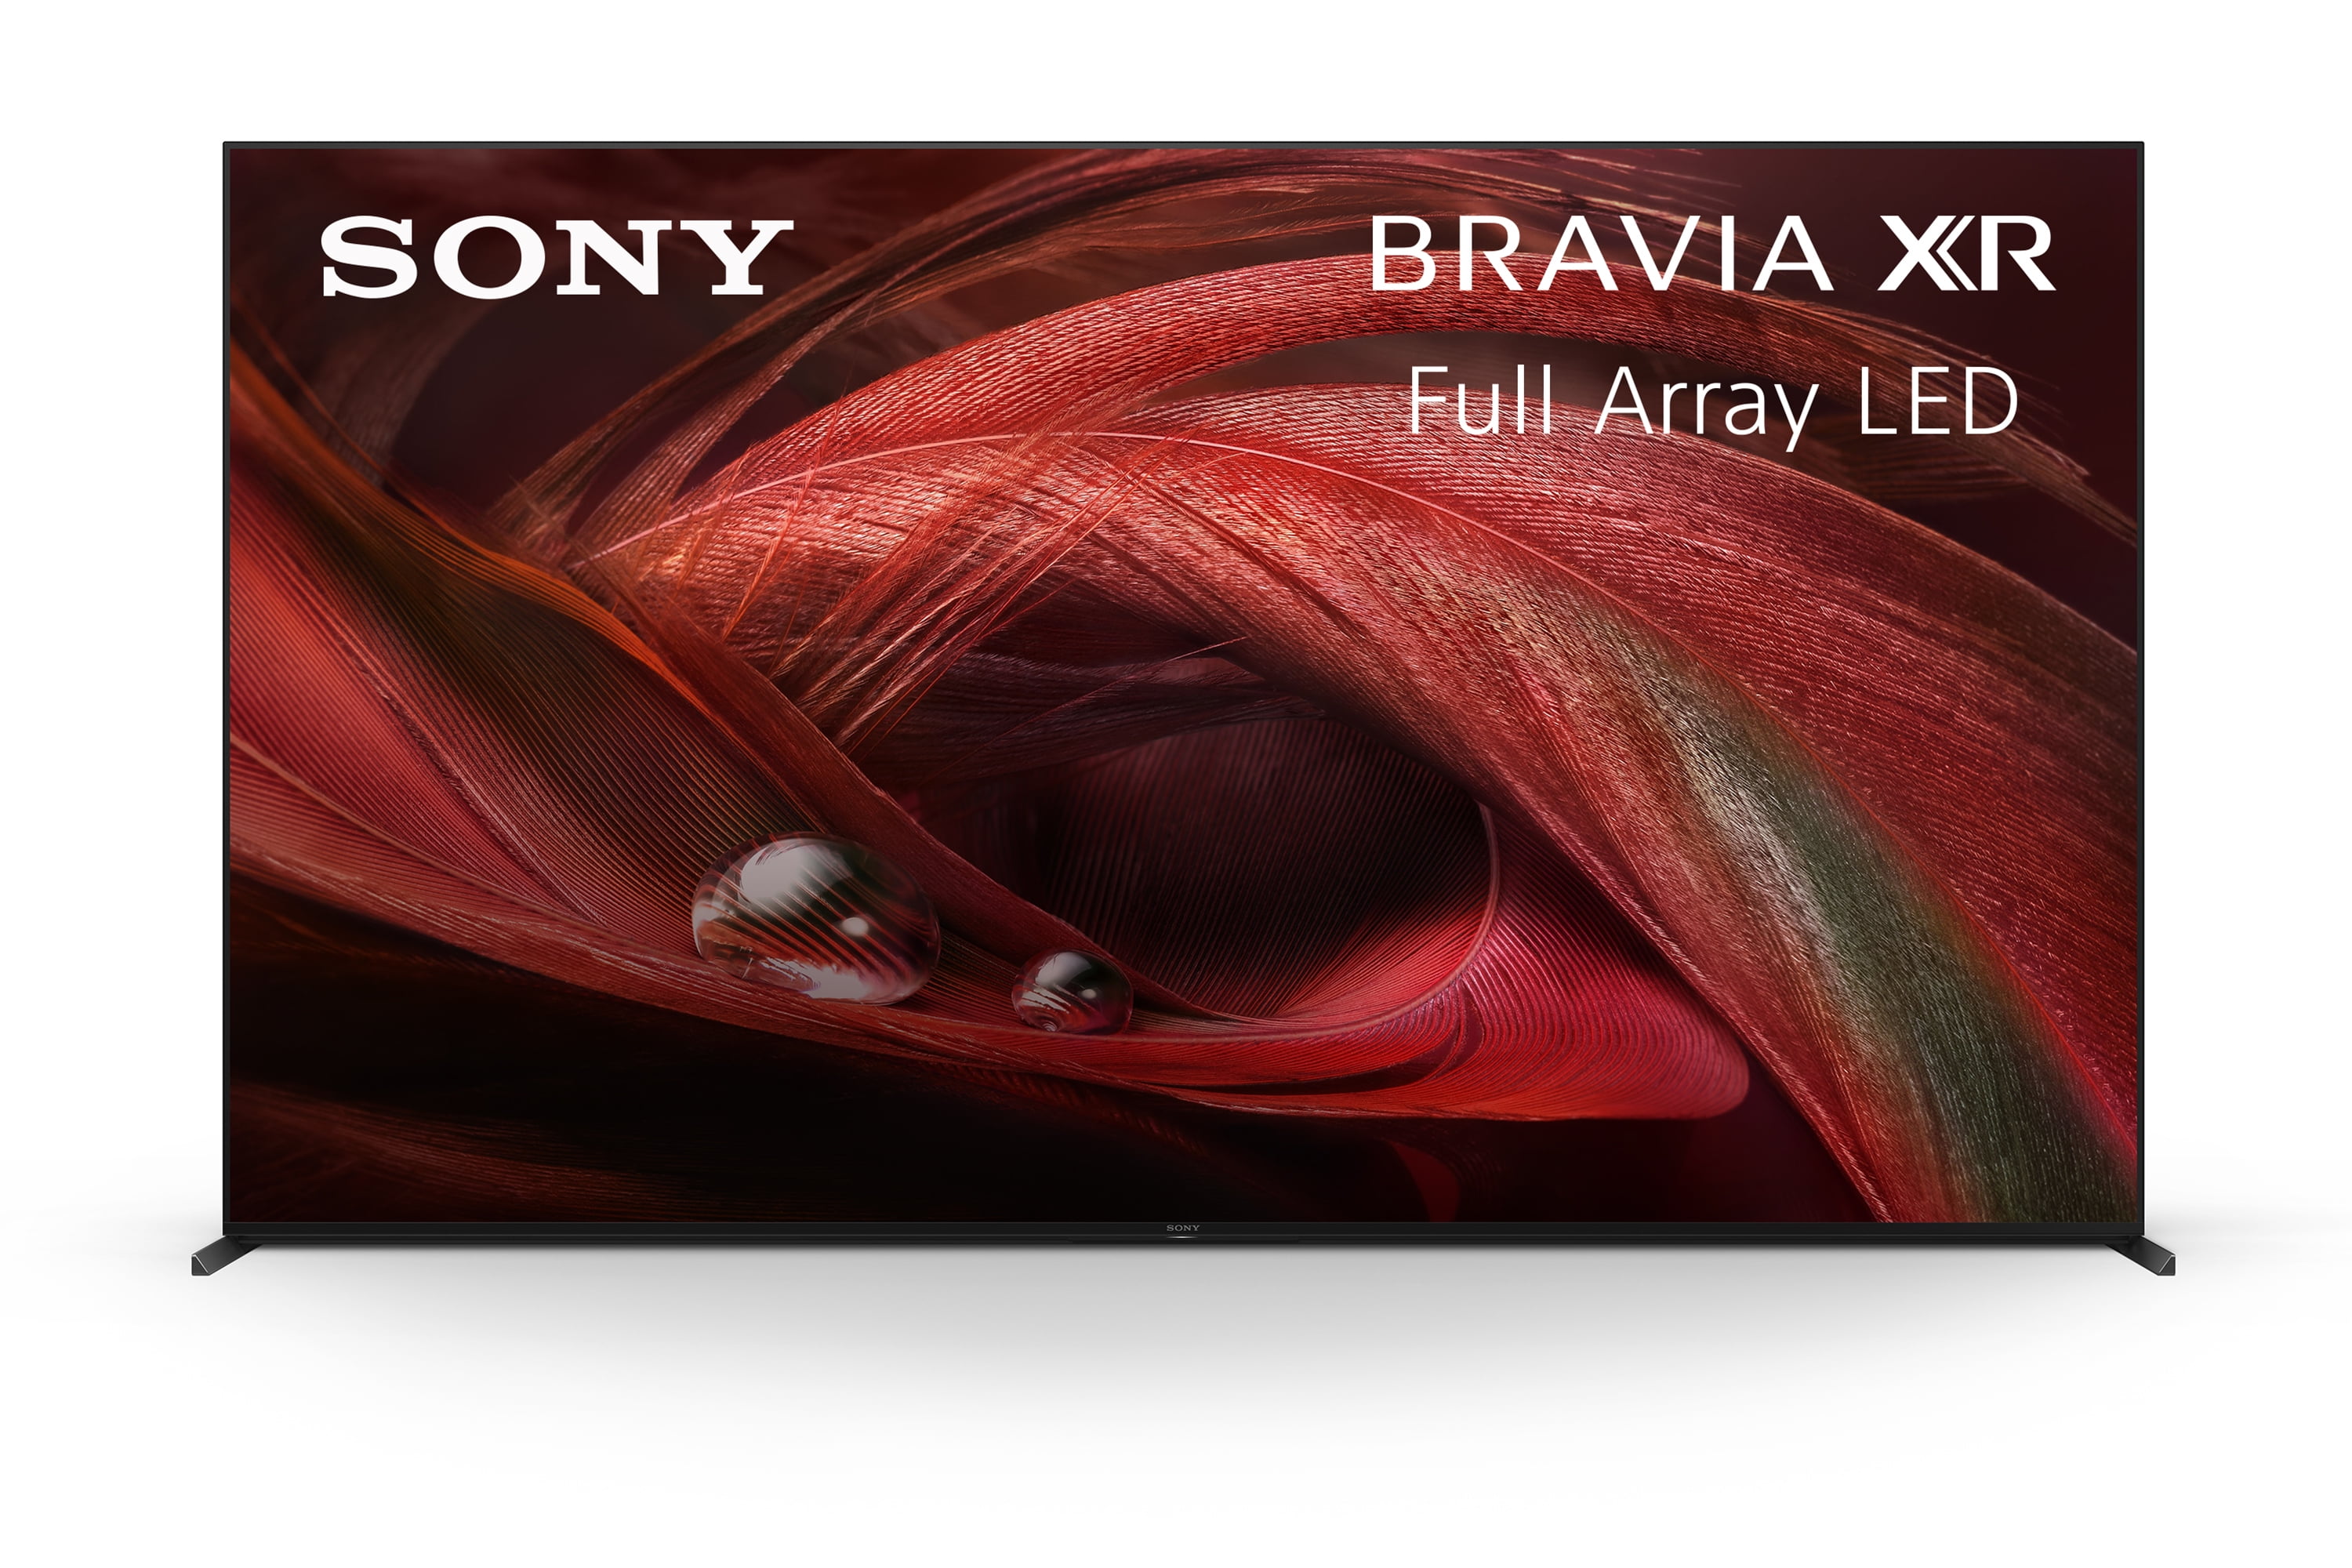 Sony 75" Class XR75X95J BRAVIA XR Full Array LED 4K Ultra HD Smart Google TV with Dolby Vision HDR X95J Series 2021 Model